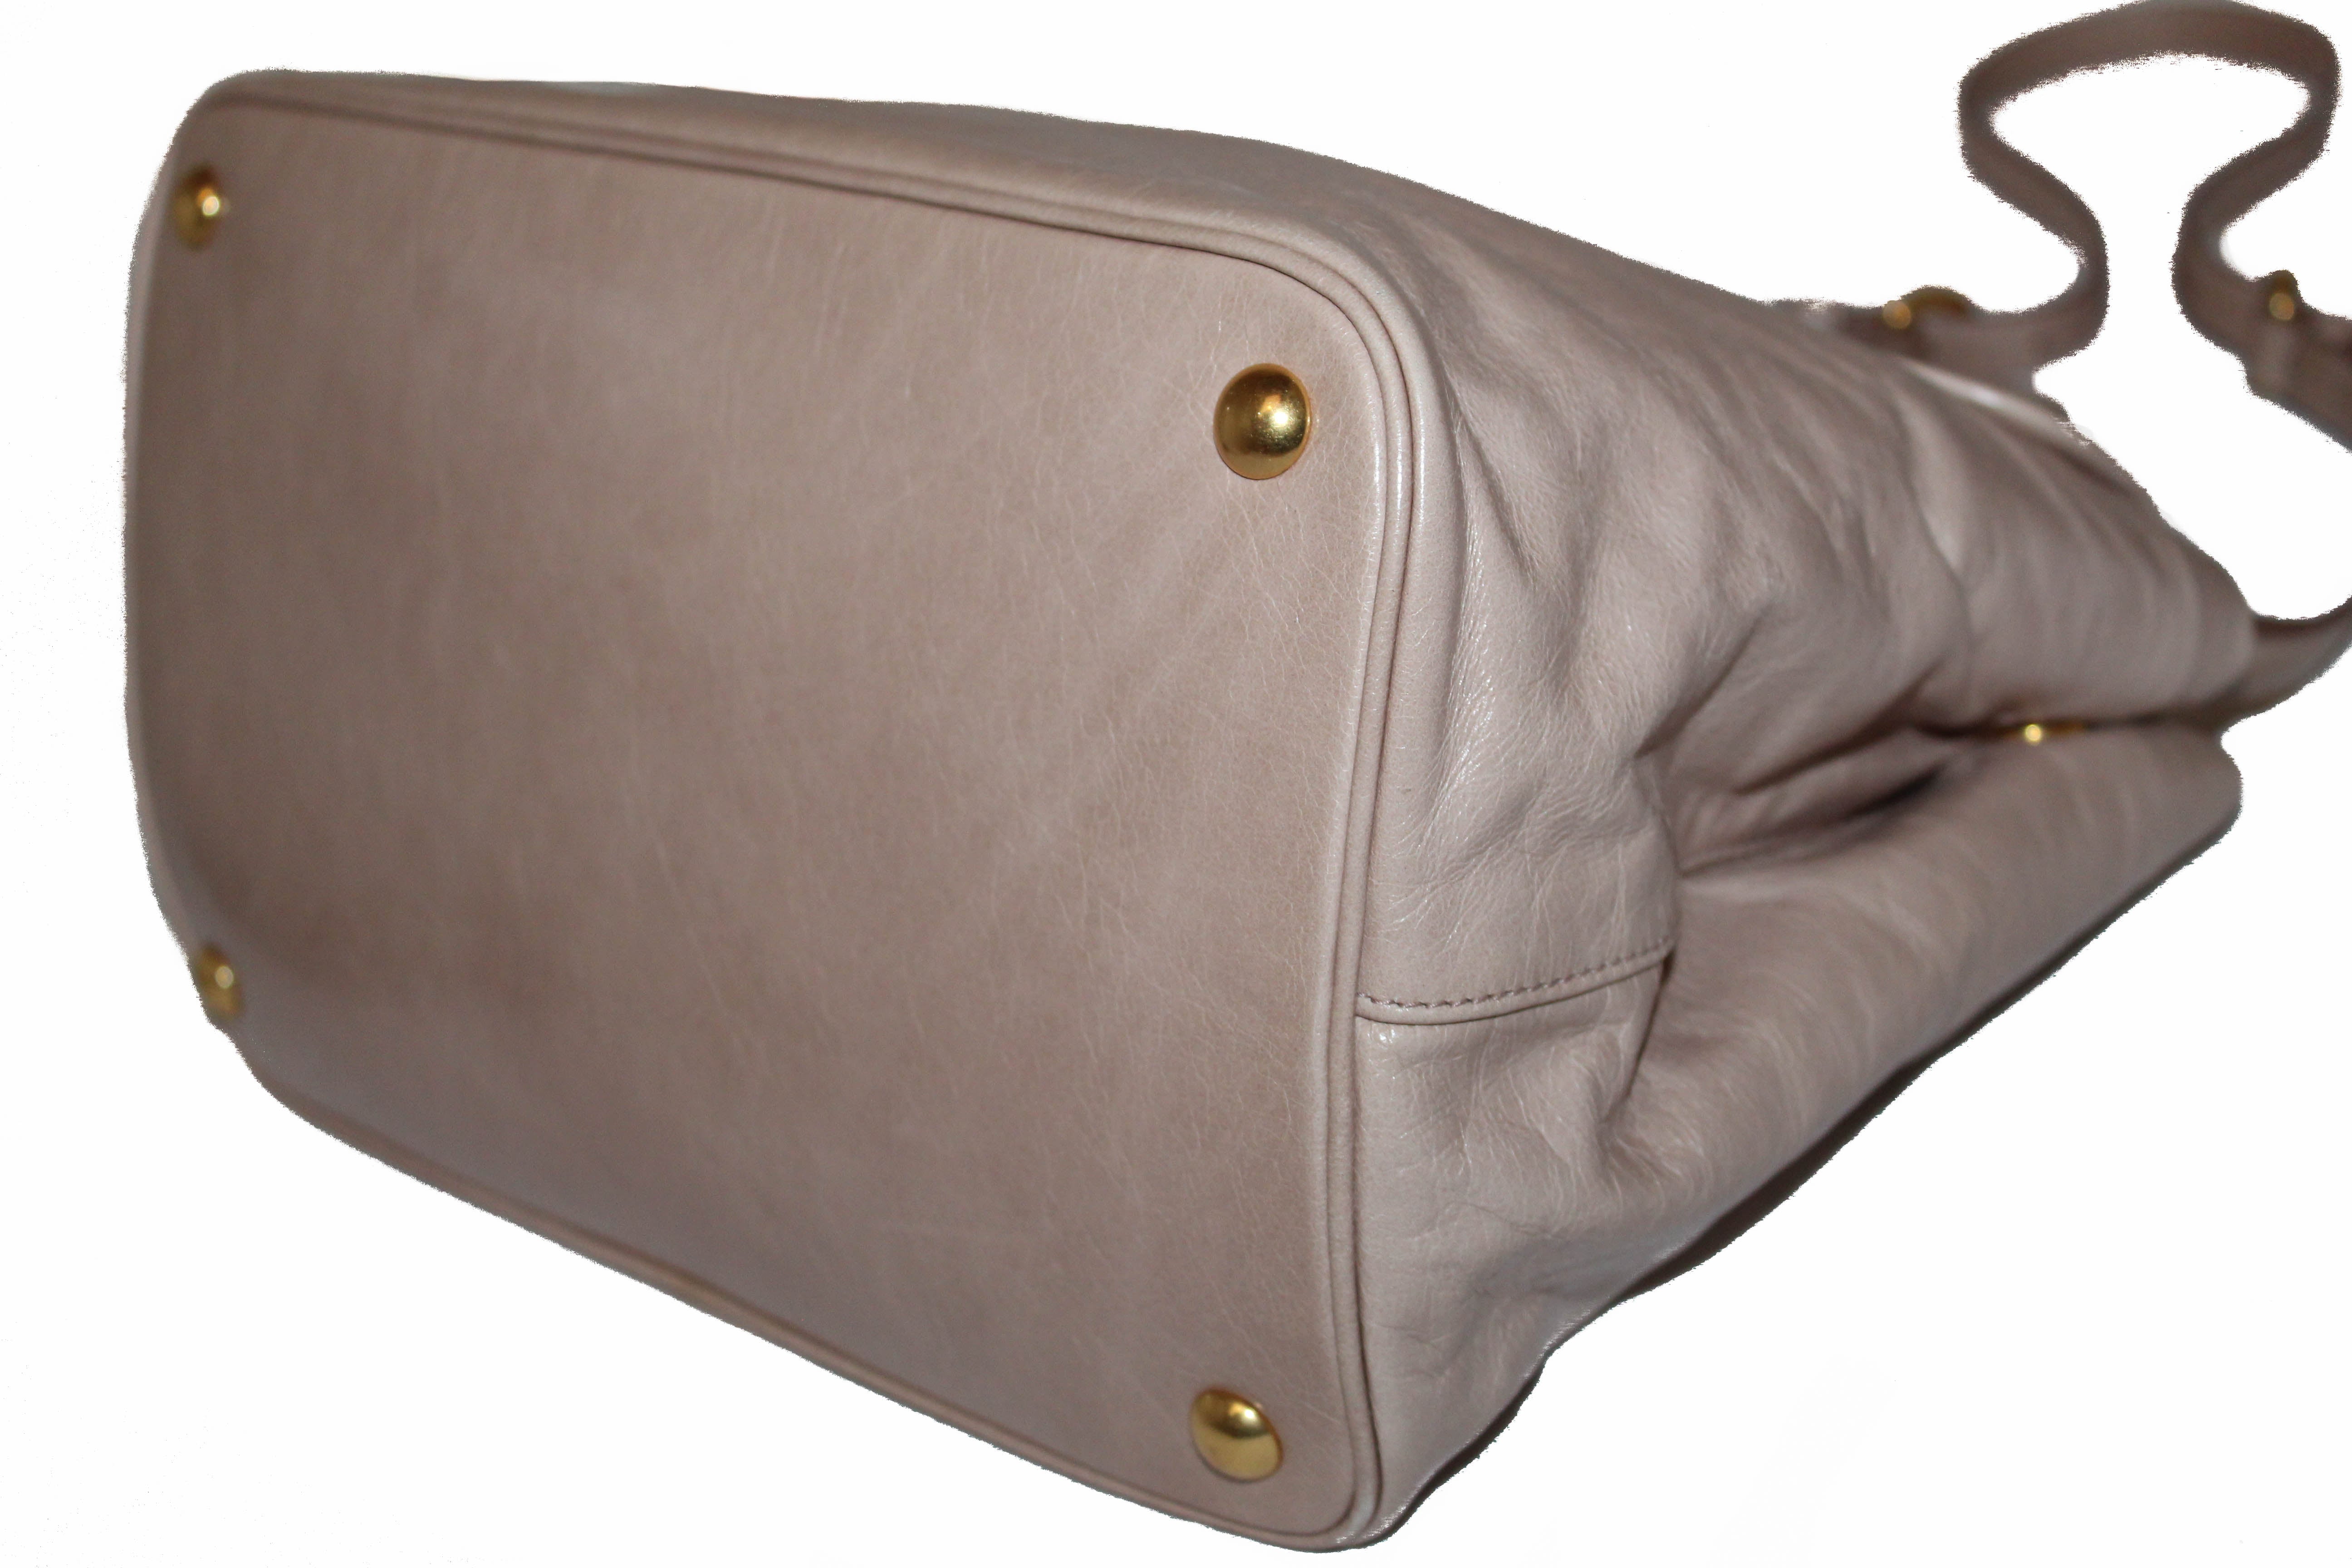 Miu Miu - Vitello Shine Top Handle Bag with Strap Cipria